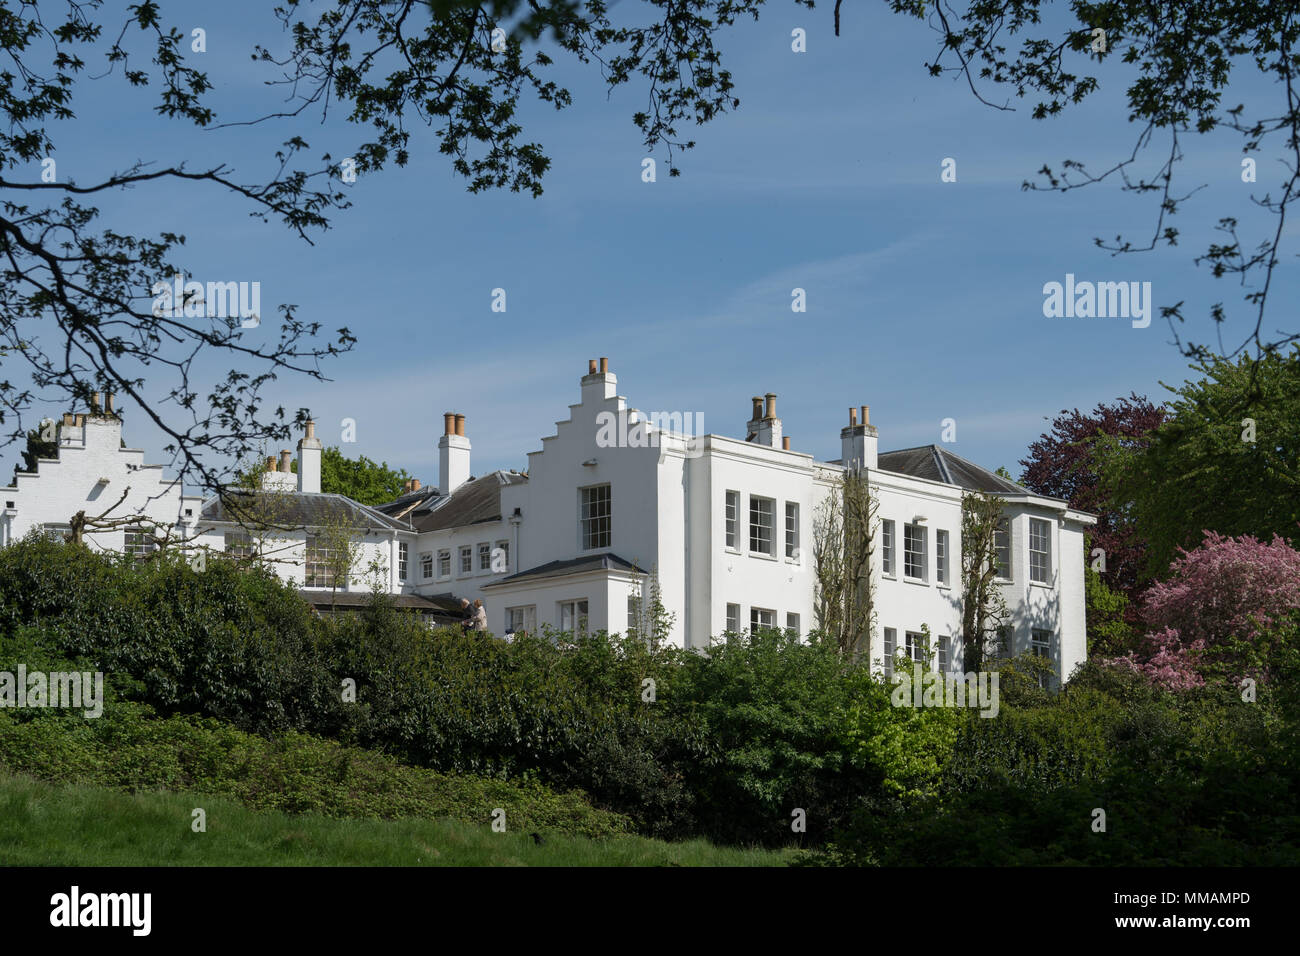 Blick von Pembroke Lodge im Richmond Park, London. Foto Datum: Donnerstag, 3. Mai 2018. Foto: Roger Garfield/Alamy Stockfoto